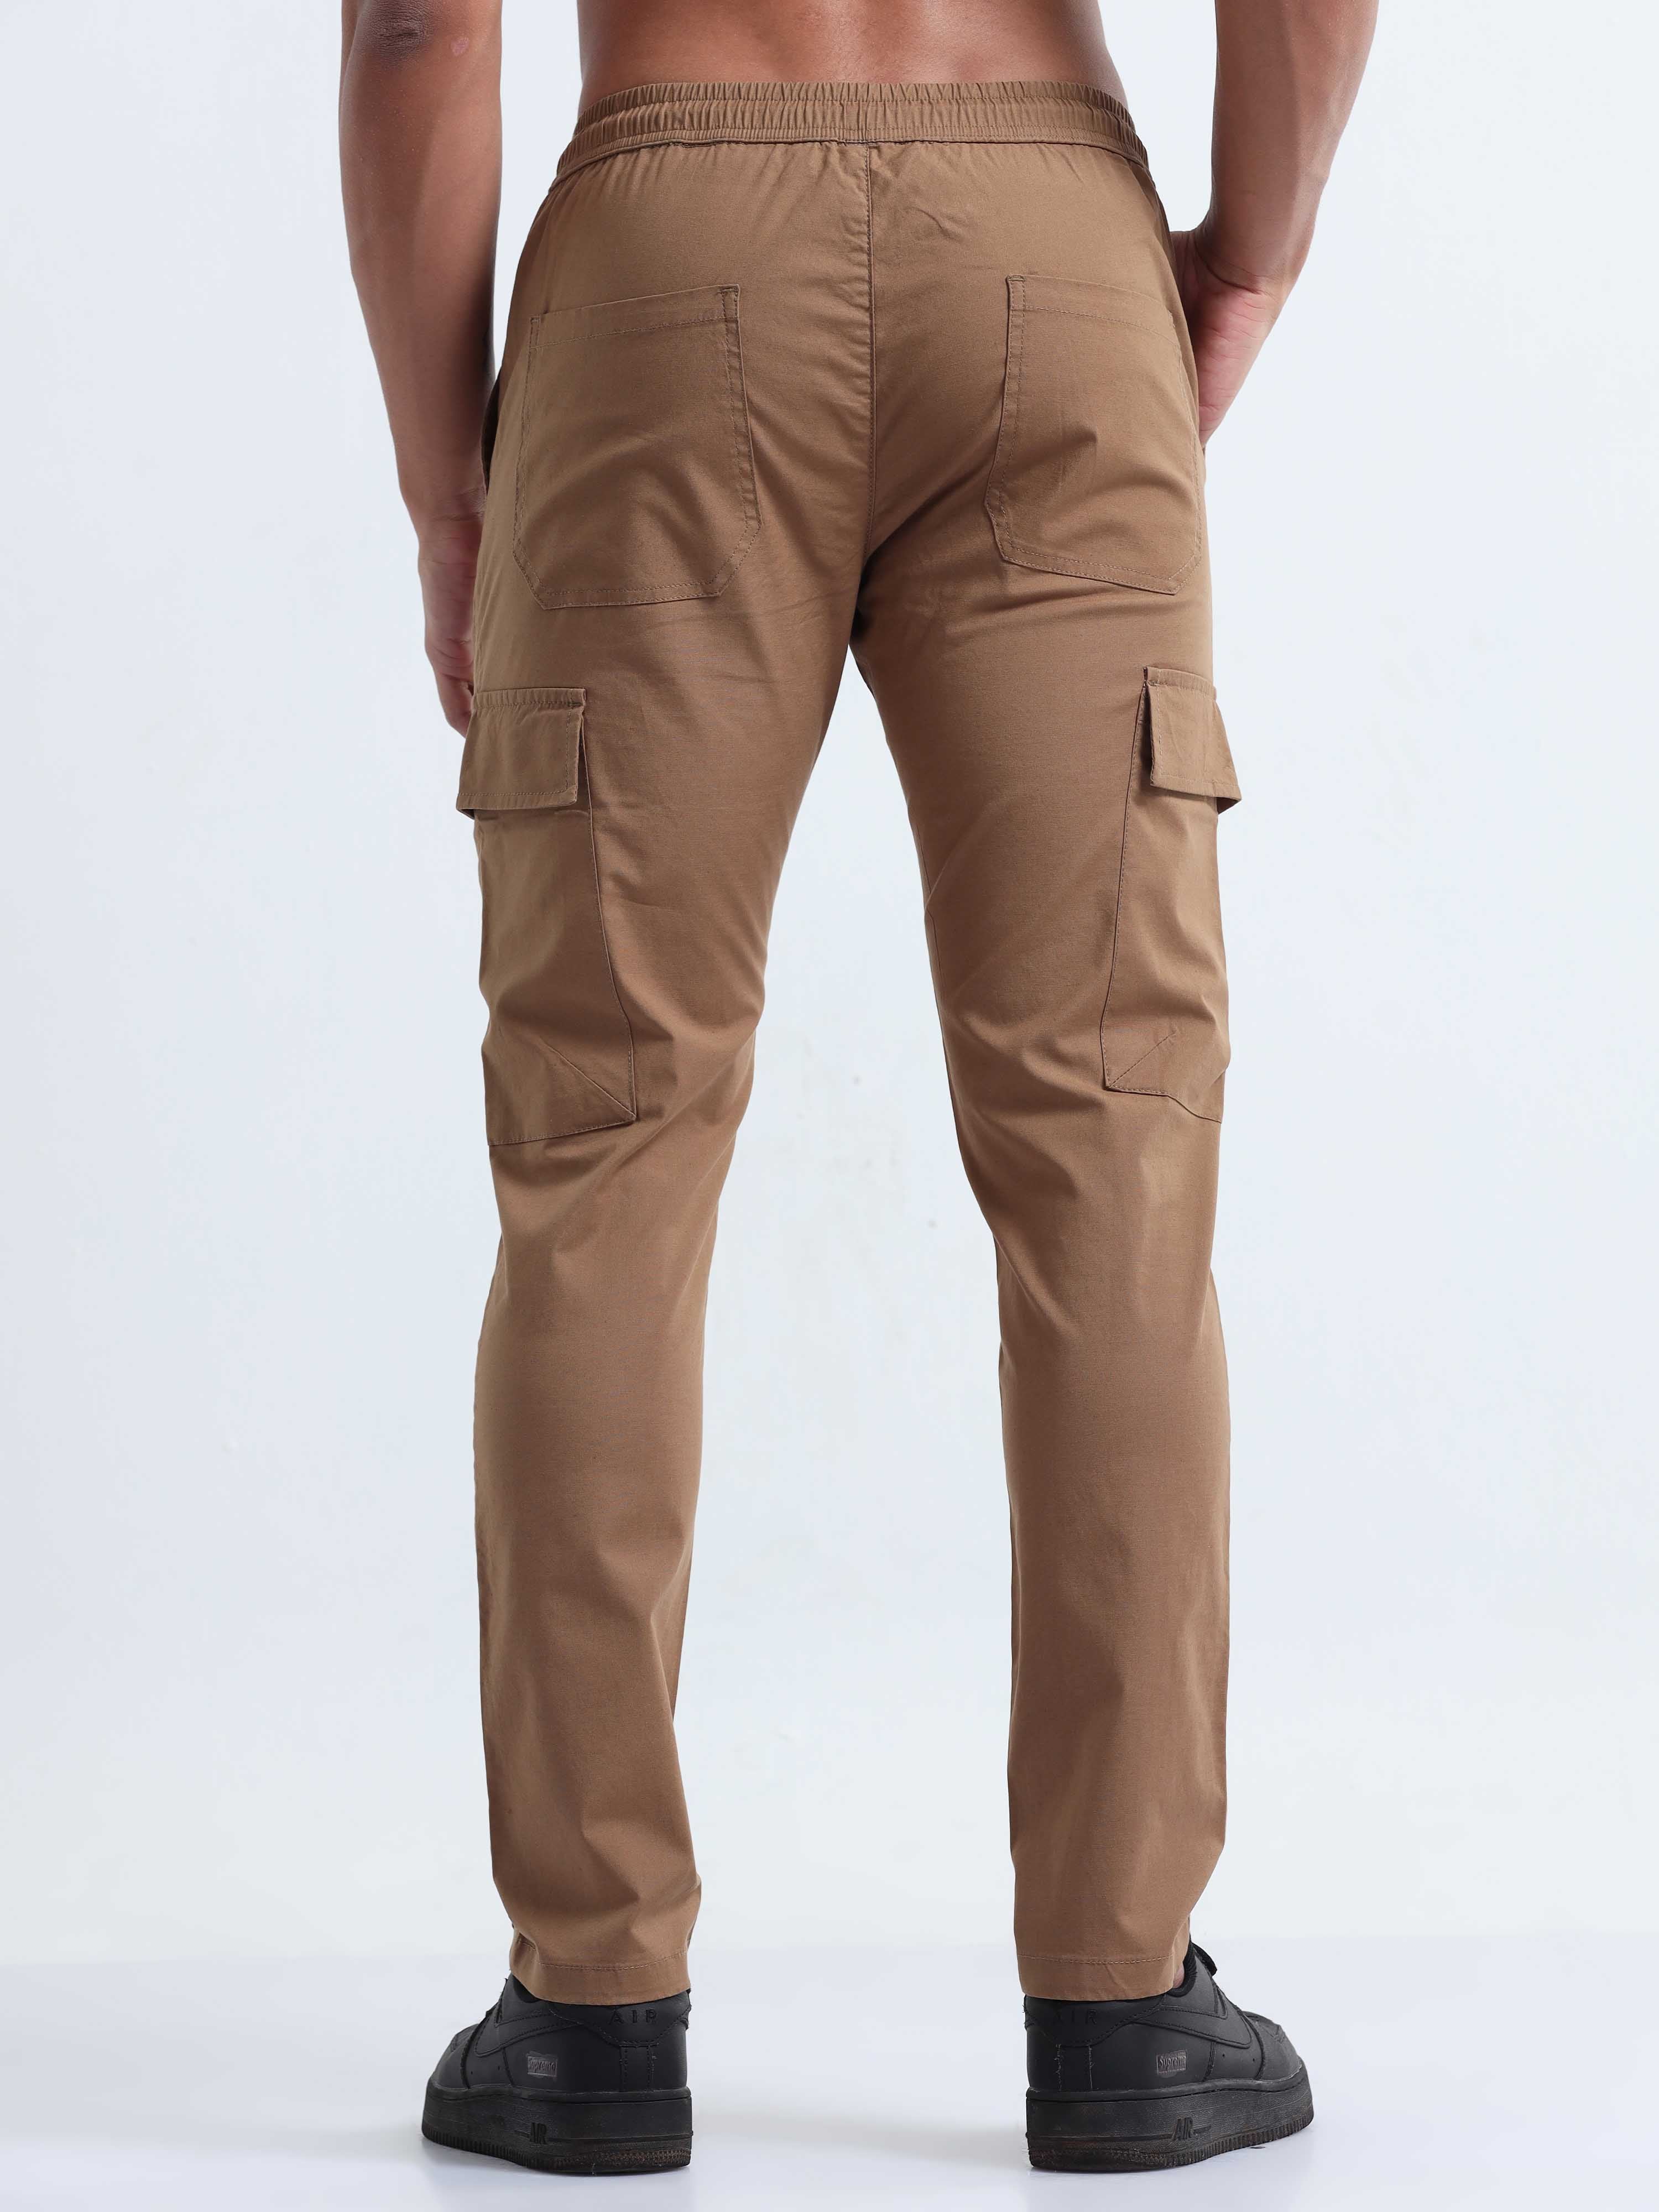 Air Sense Khaki Cargo Pants for Men 